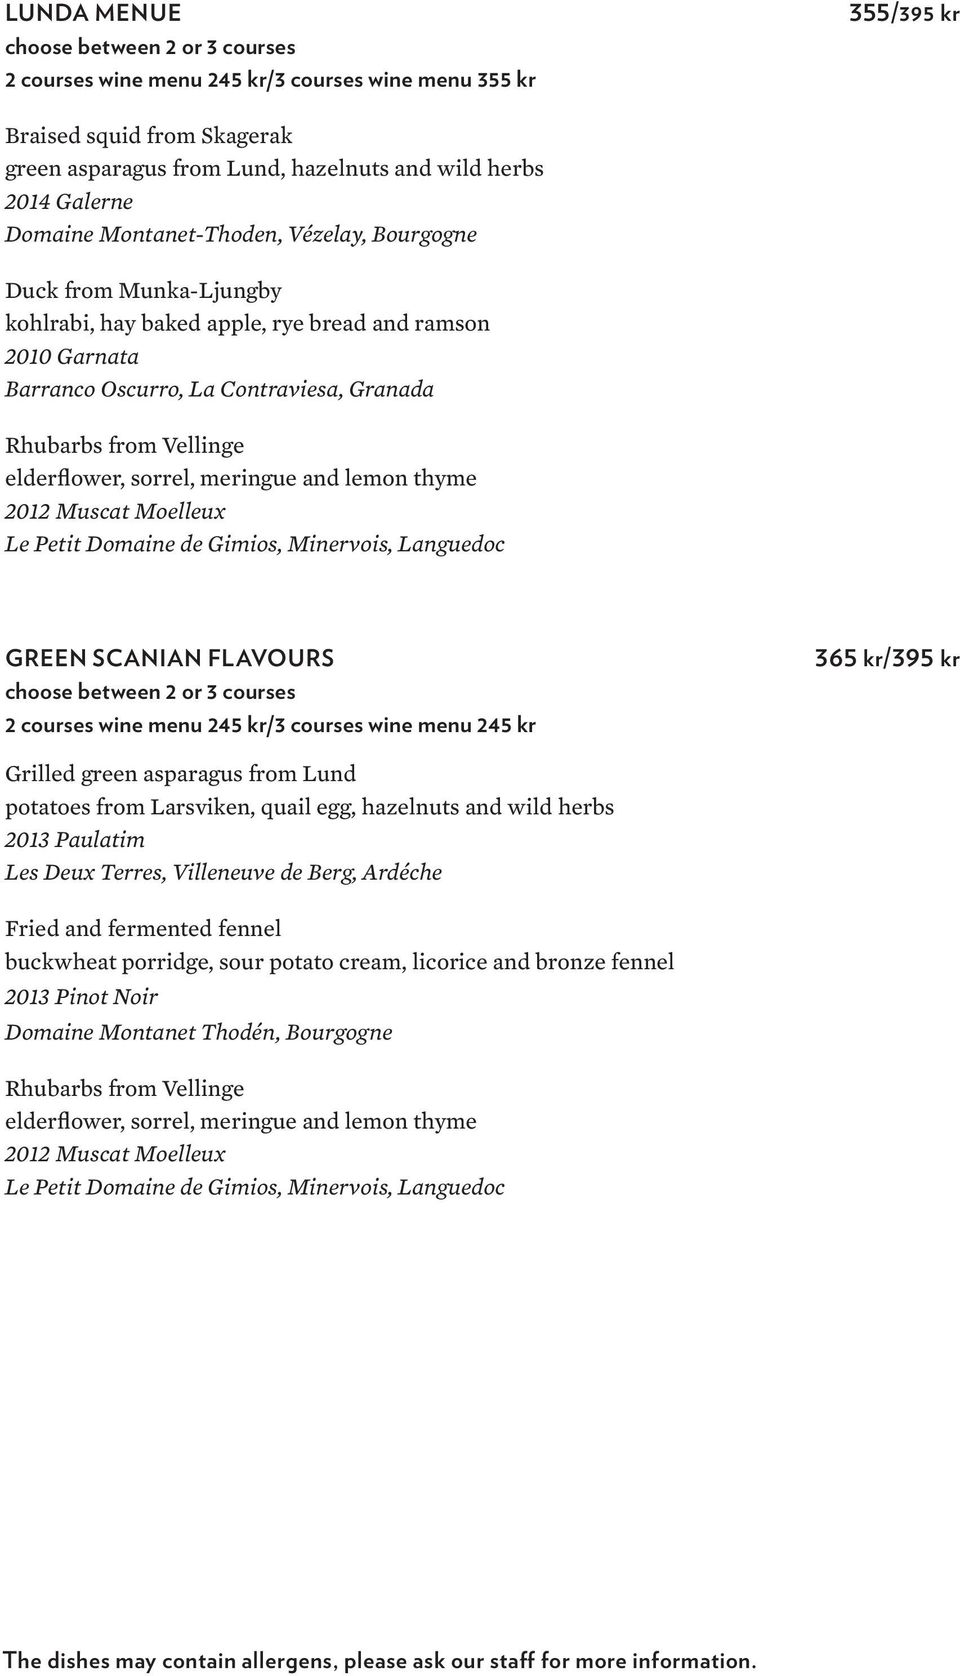 elderflower, sorrel, meringue and lemon thyme GREEN SCANIAN FLAVOURS choose between 2 or 3 courses 2 courses wine menu 245 kr/3 courses wine menu 245 kr 365 kr/395 kr Grilled green asparagus from